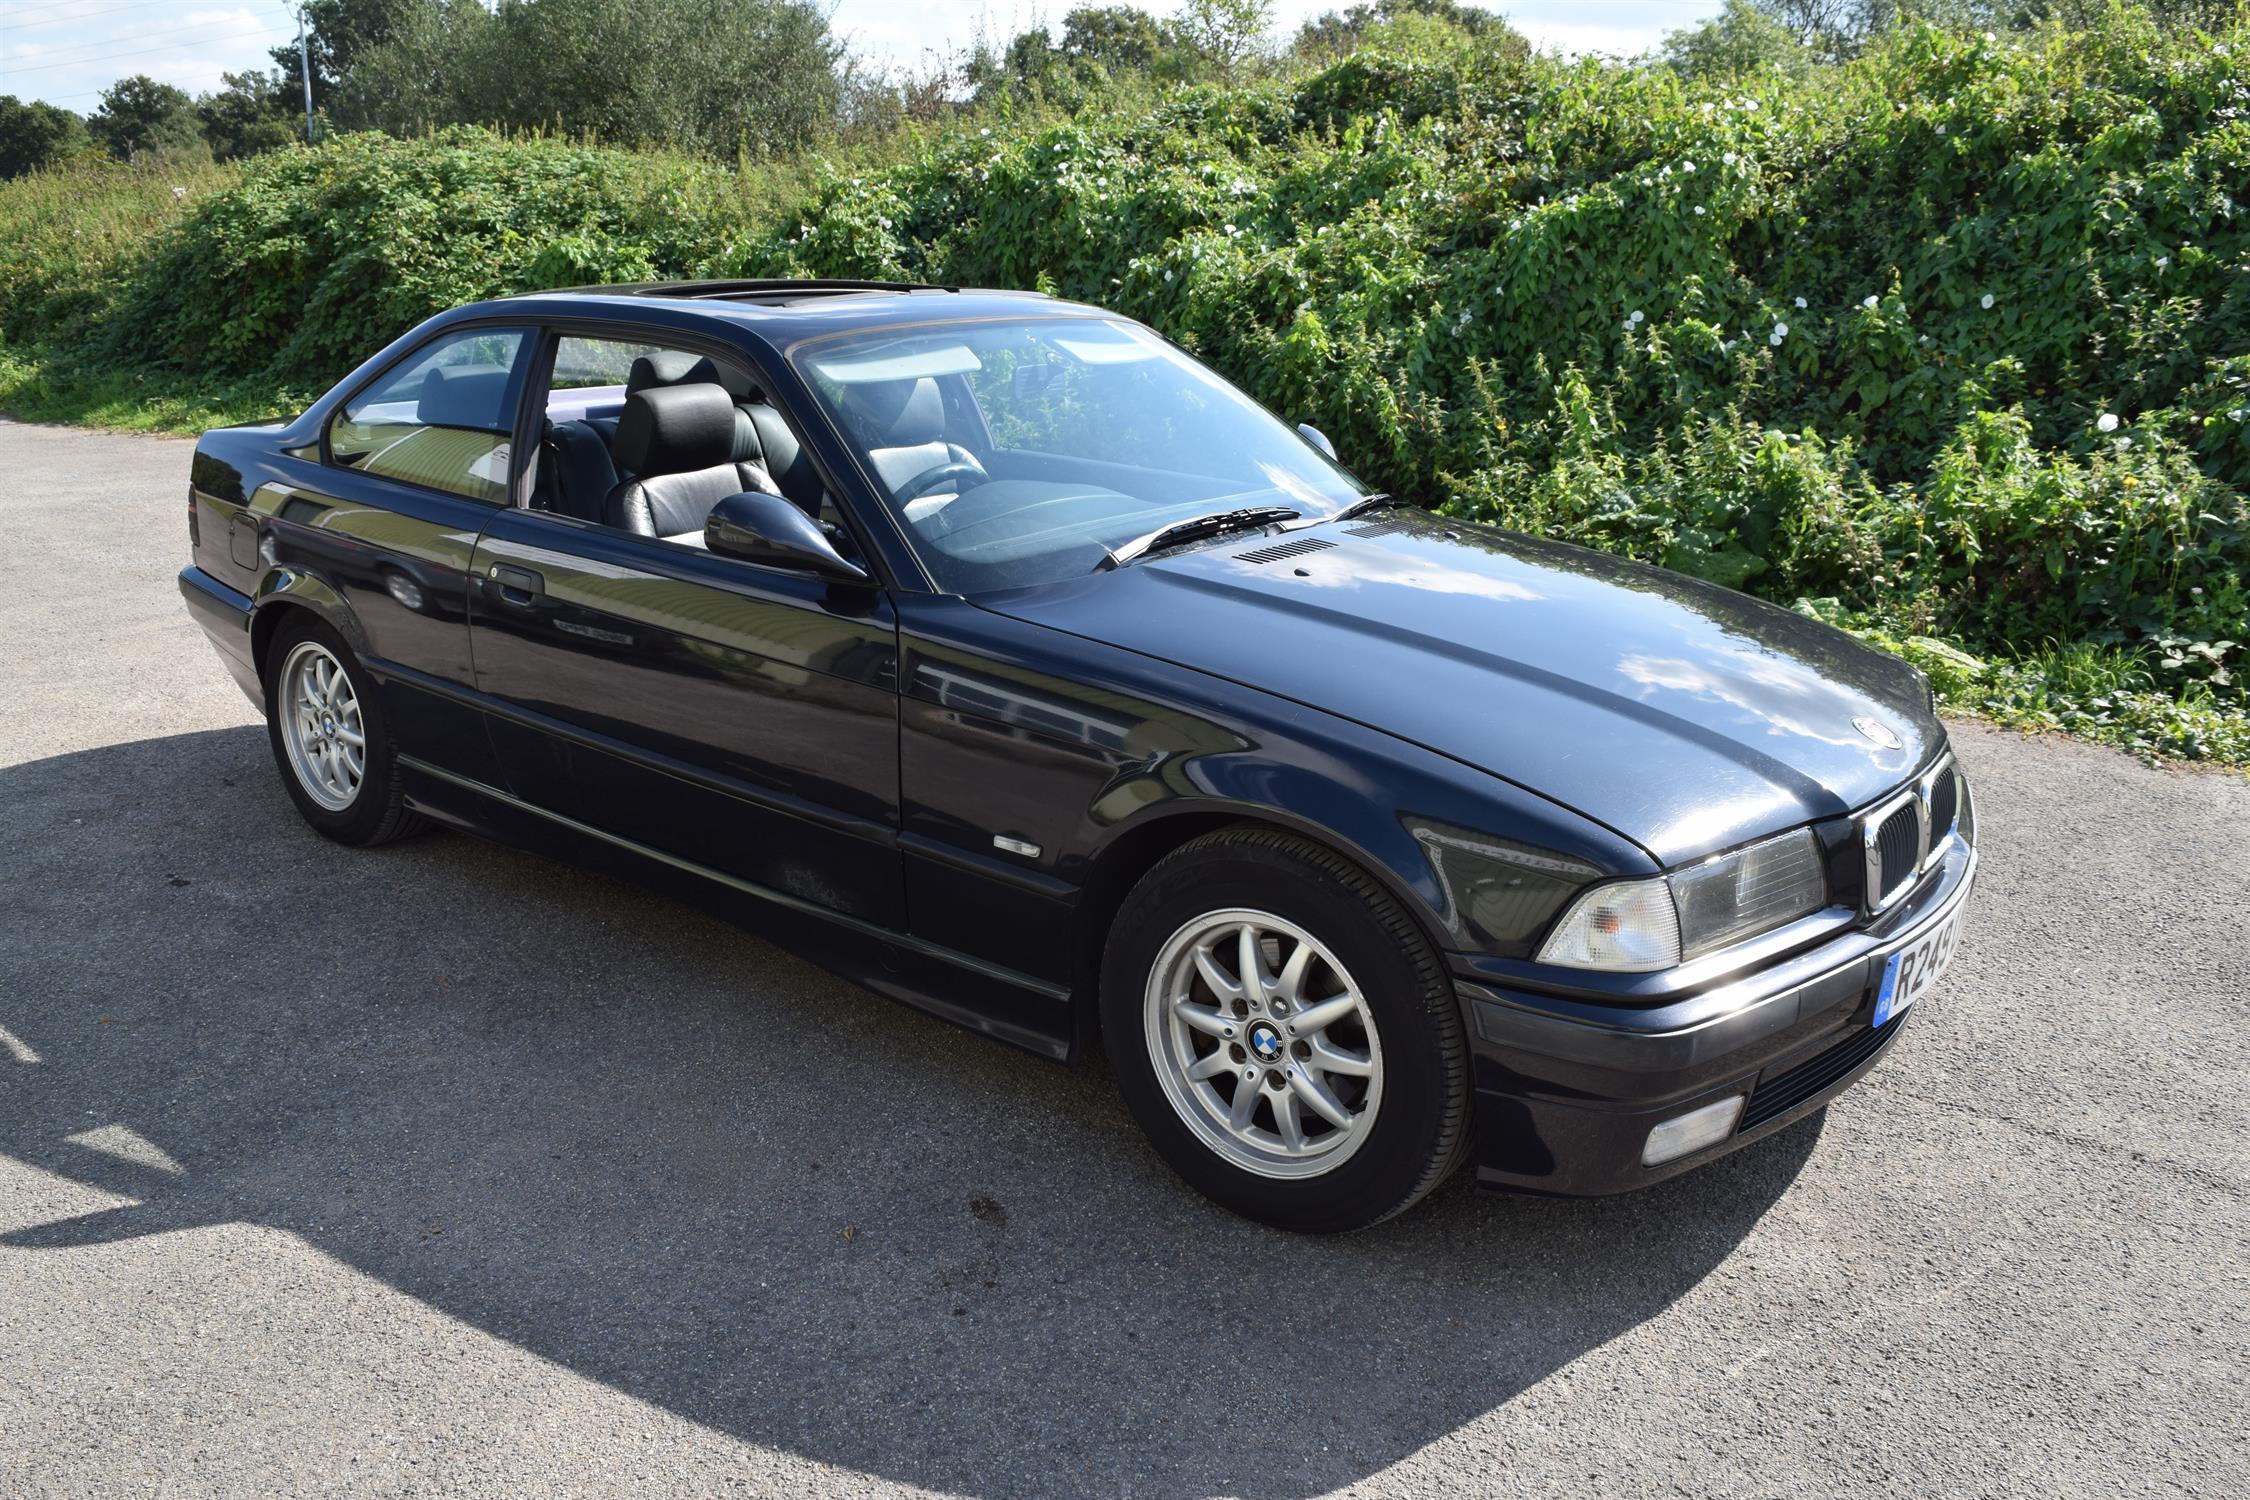 1997 BMW E36 2.5l Auto - Black on black - Odometer reading 211,000 miles, MOT’d until September - Image 4 of 20